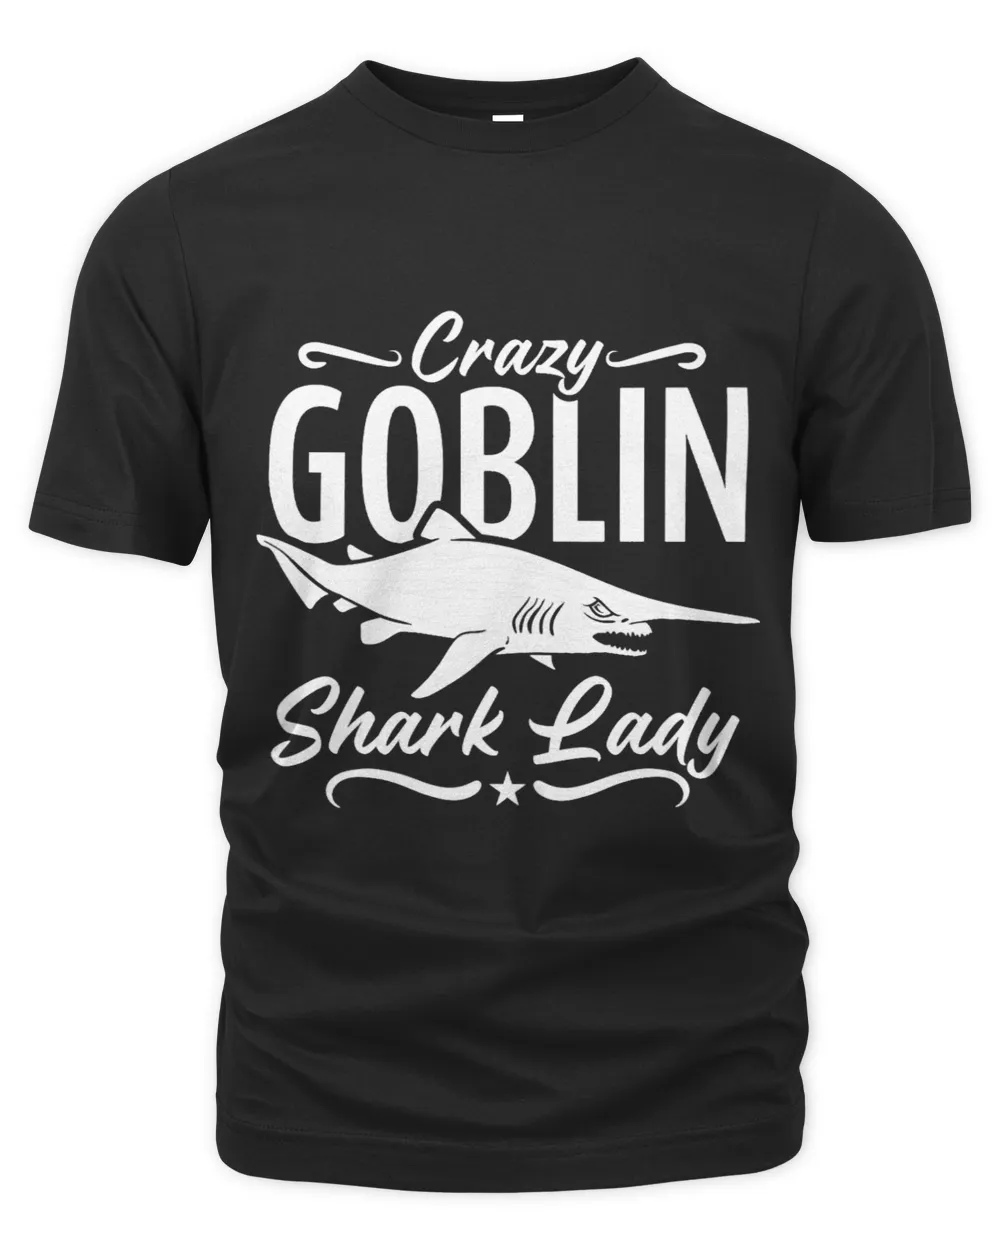 Womens Goblin Shark Animal Tooth Funny Ocean 28